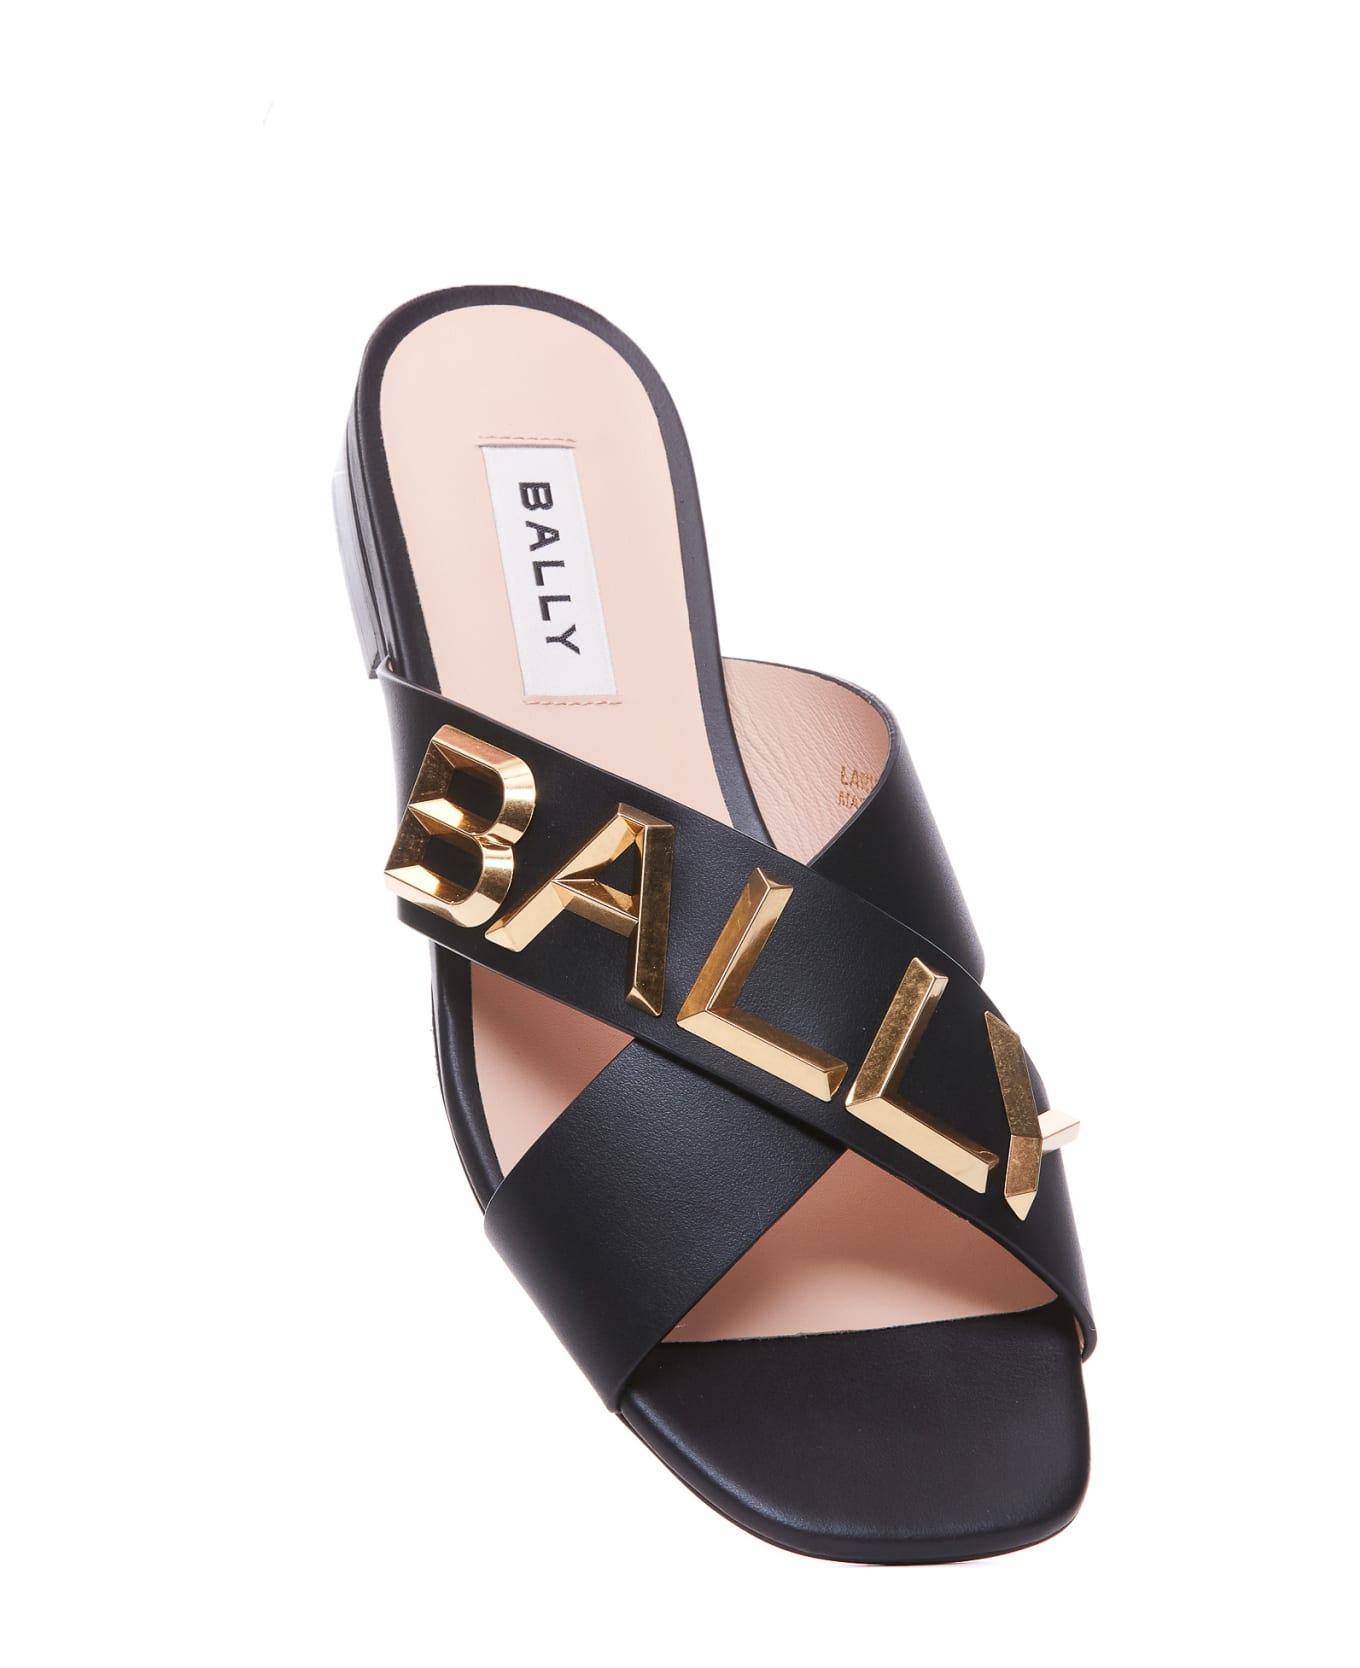 Bally Larise Flat Sandals - Black